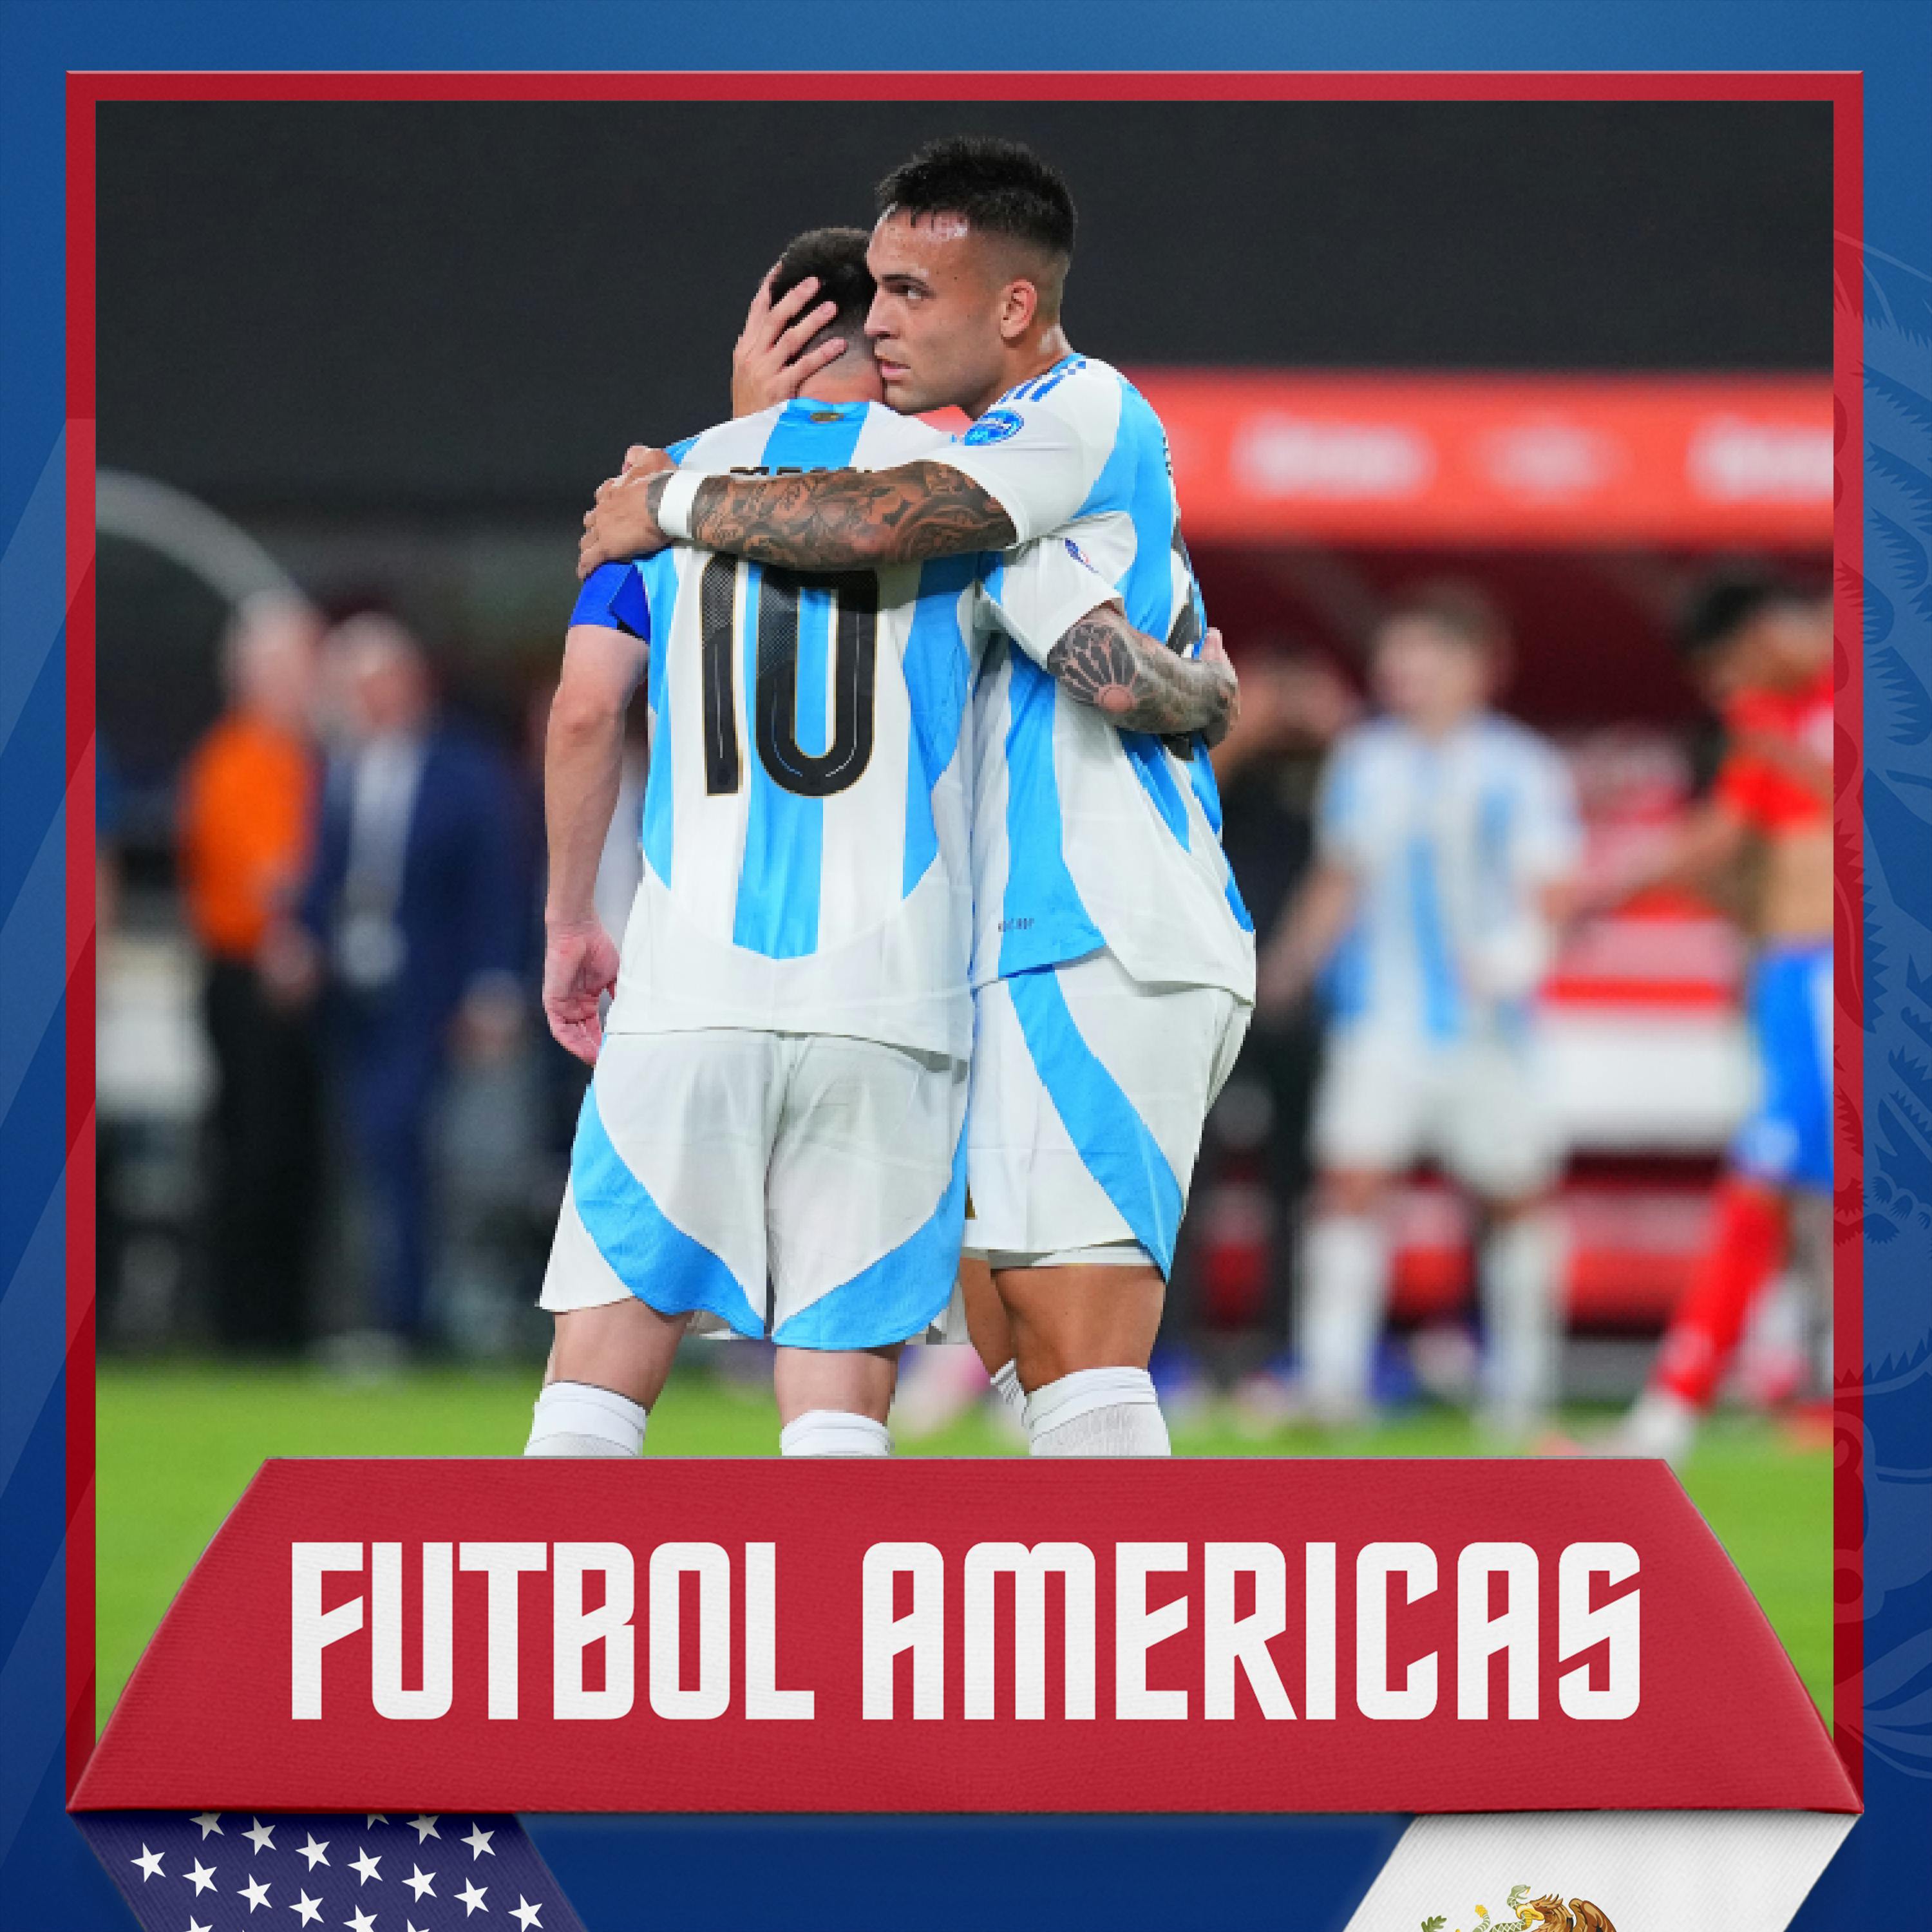 Futbol Americas: Lautaro Saves the Day for Argentina